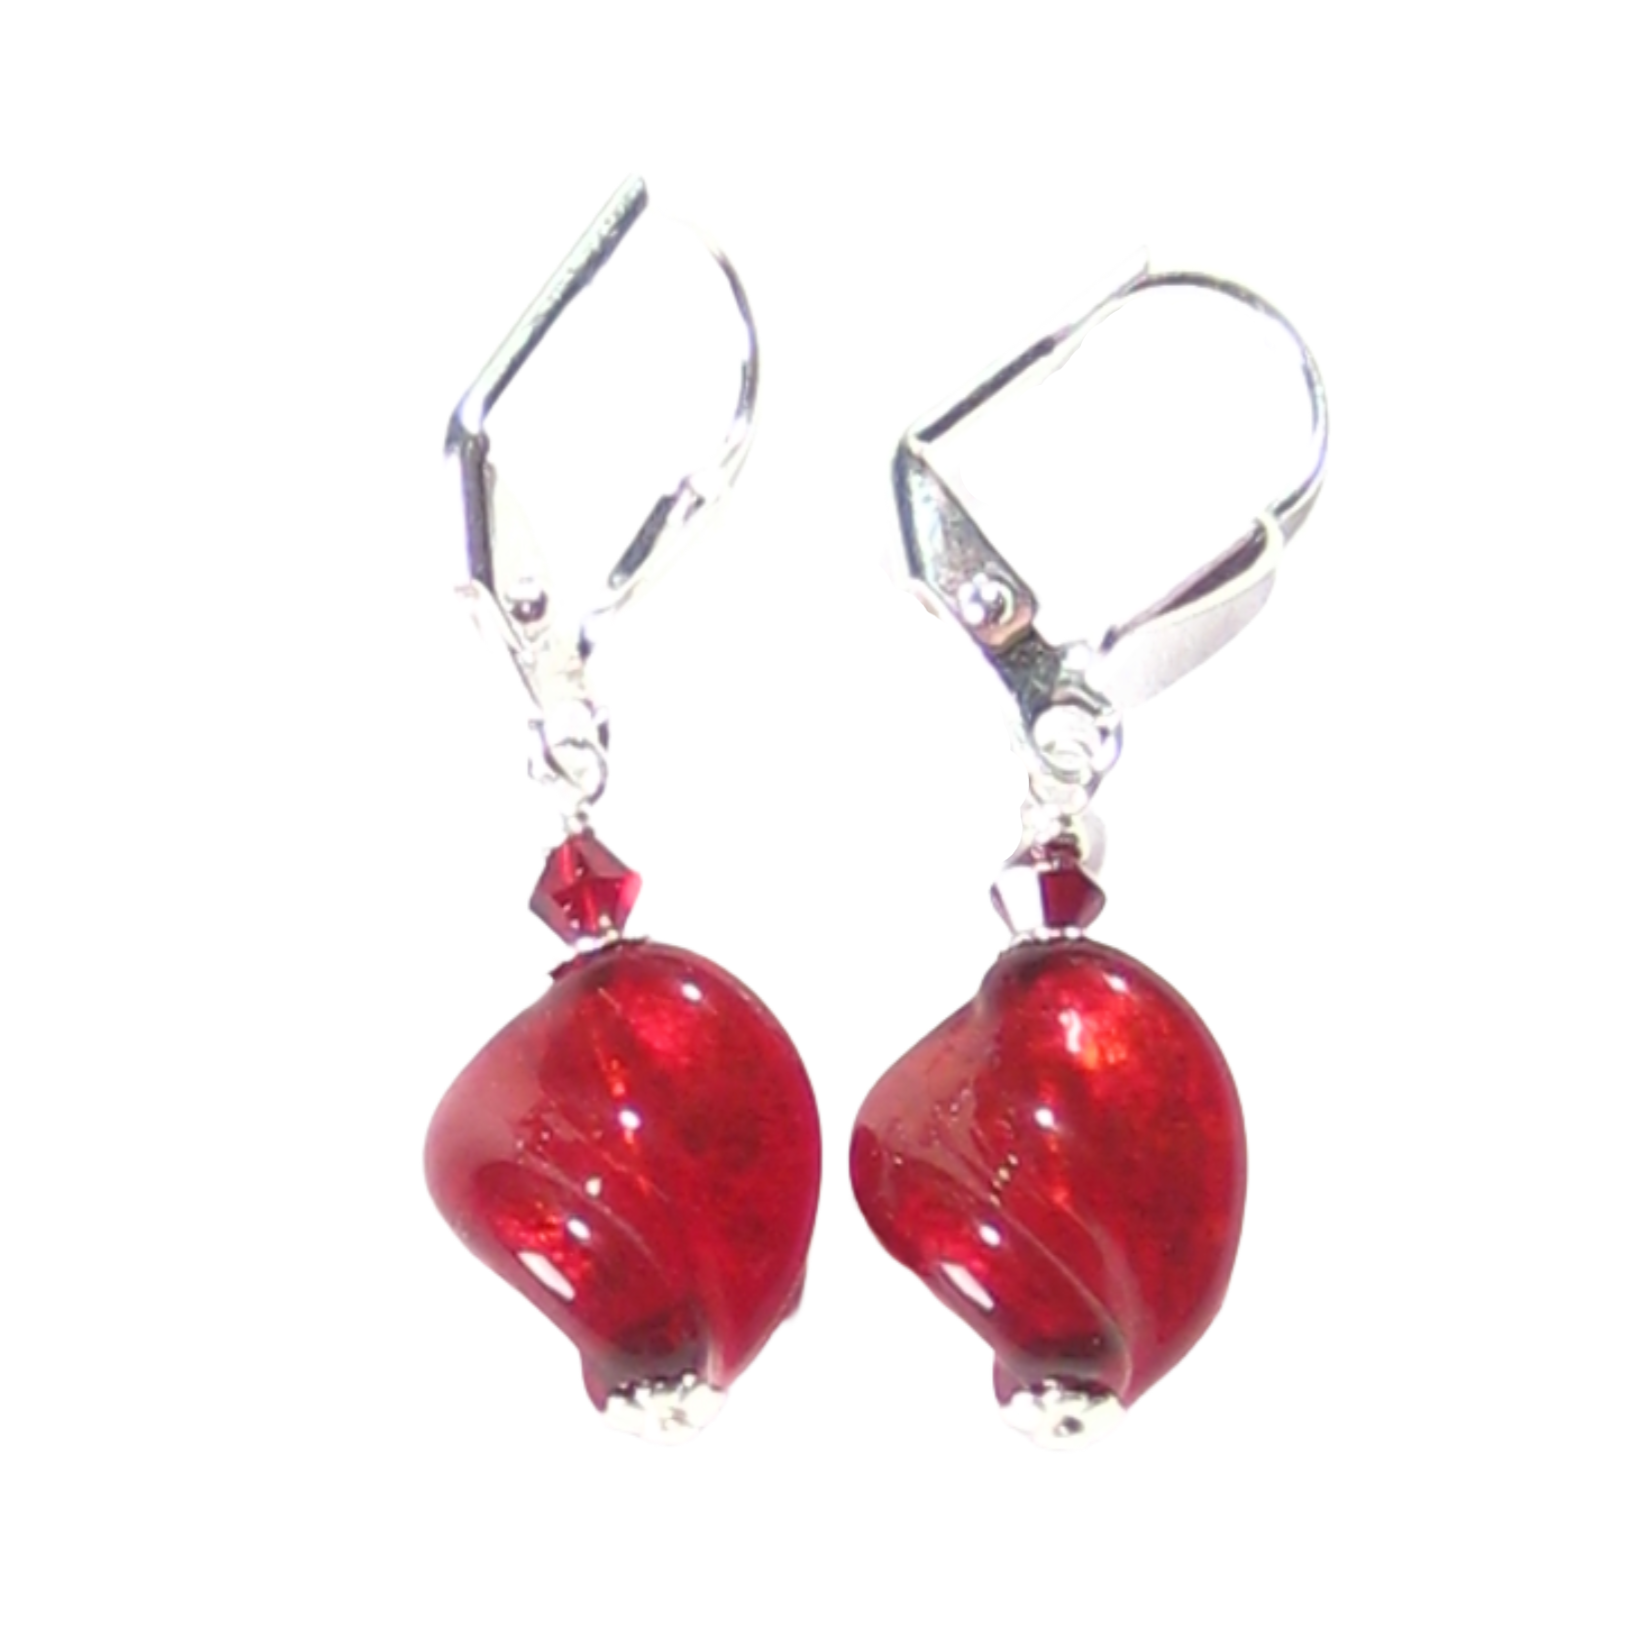 Murano Glass Red Small Twist Sterling Silver Earrings, Leverback Earrings - JKC Murano